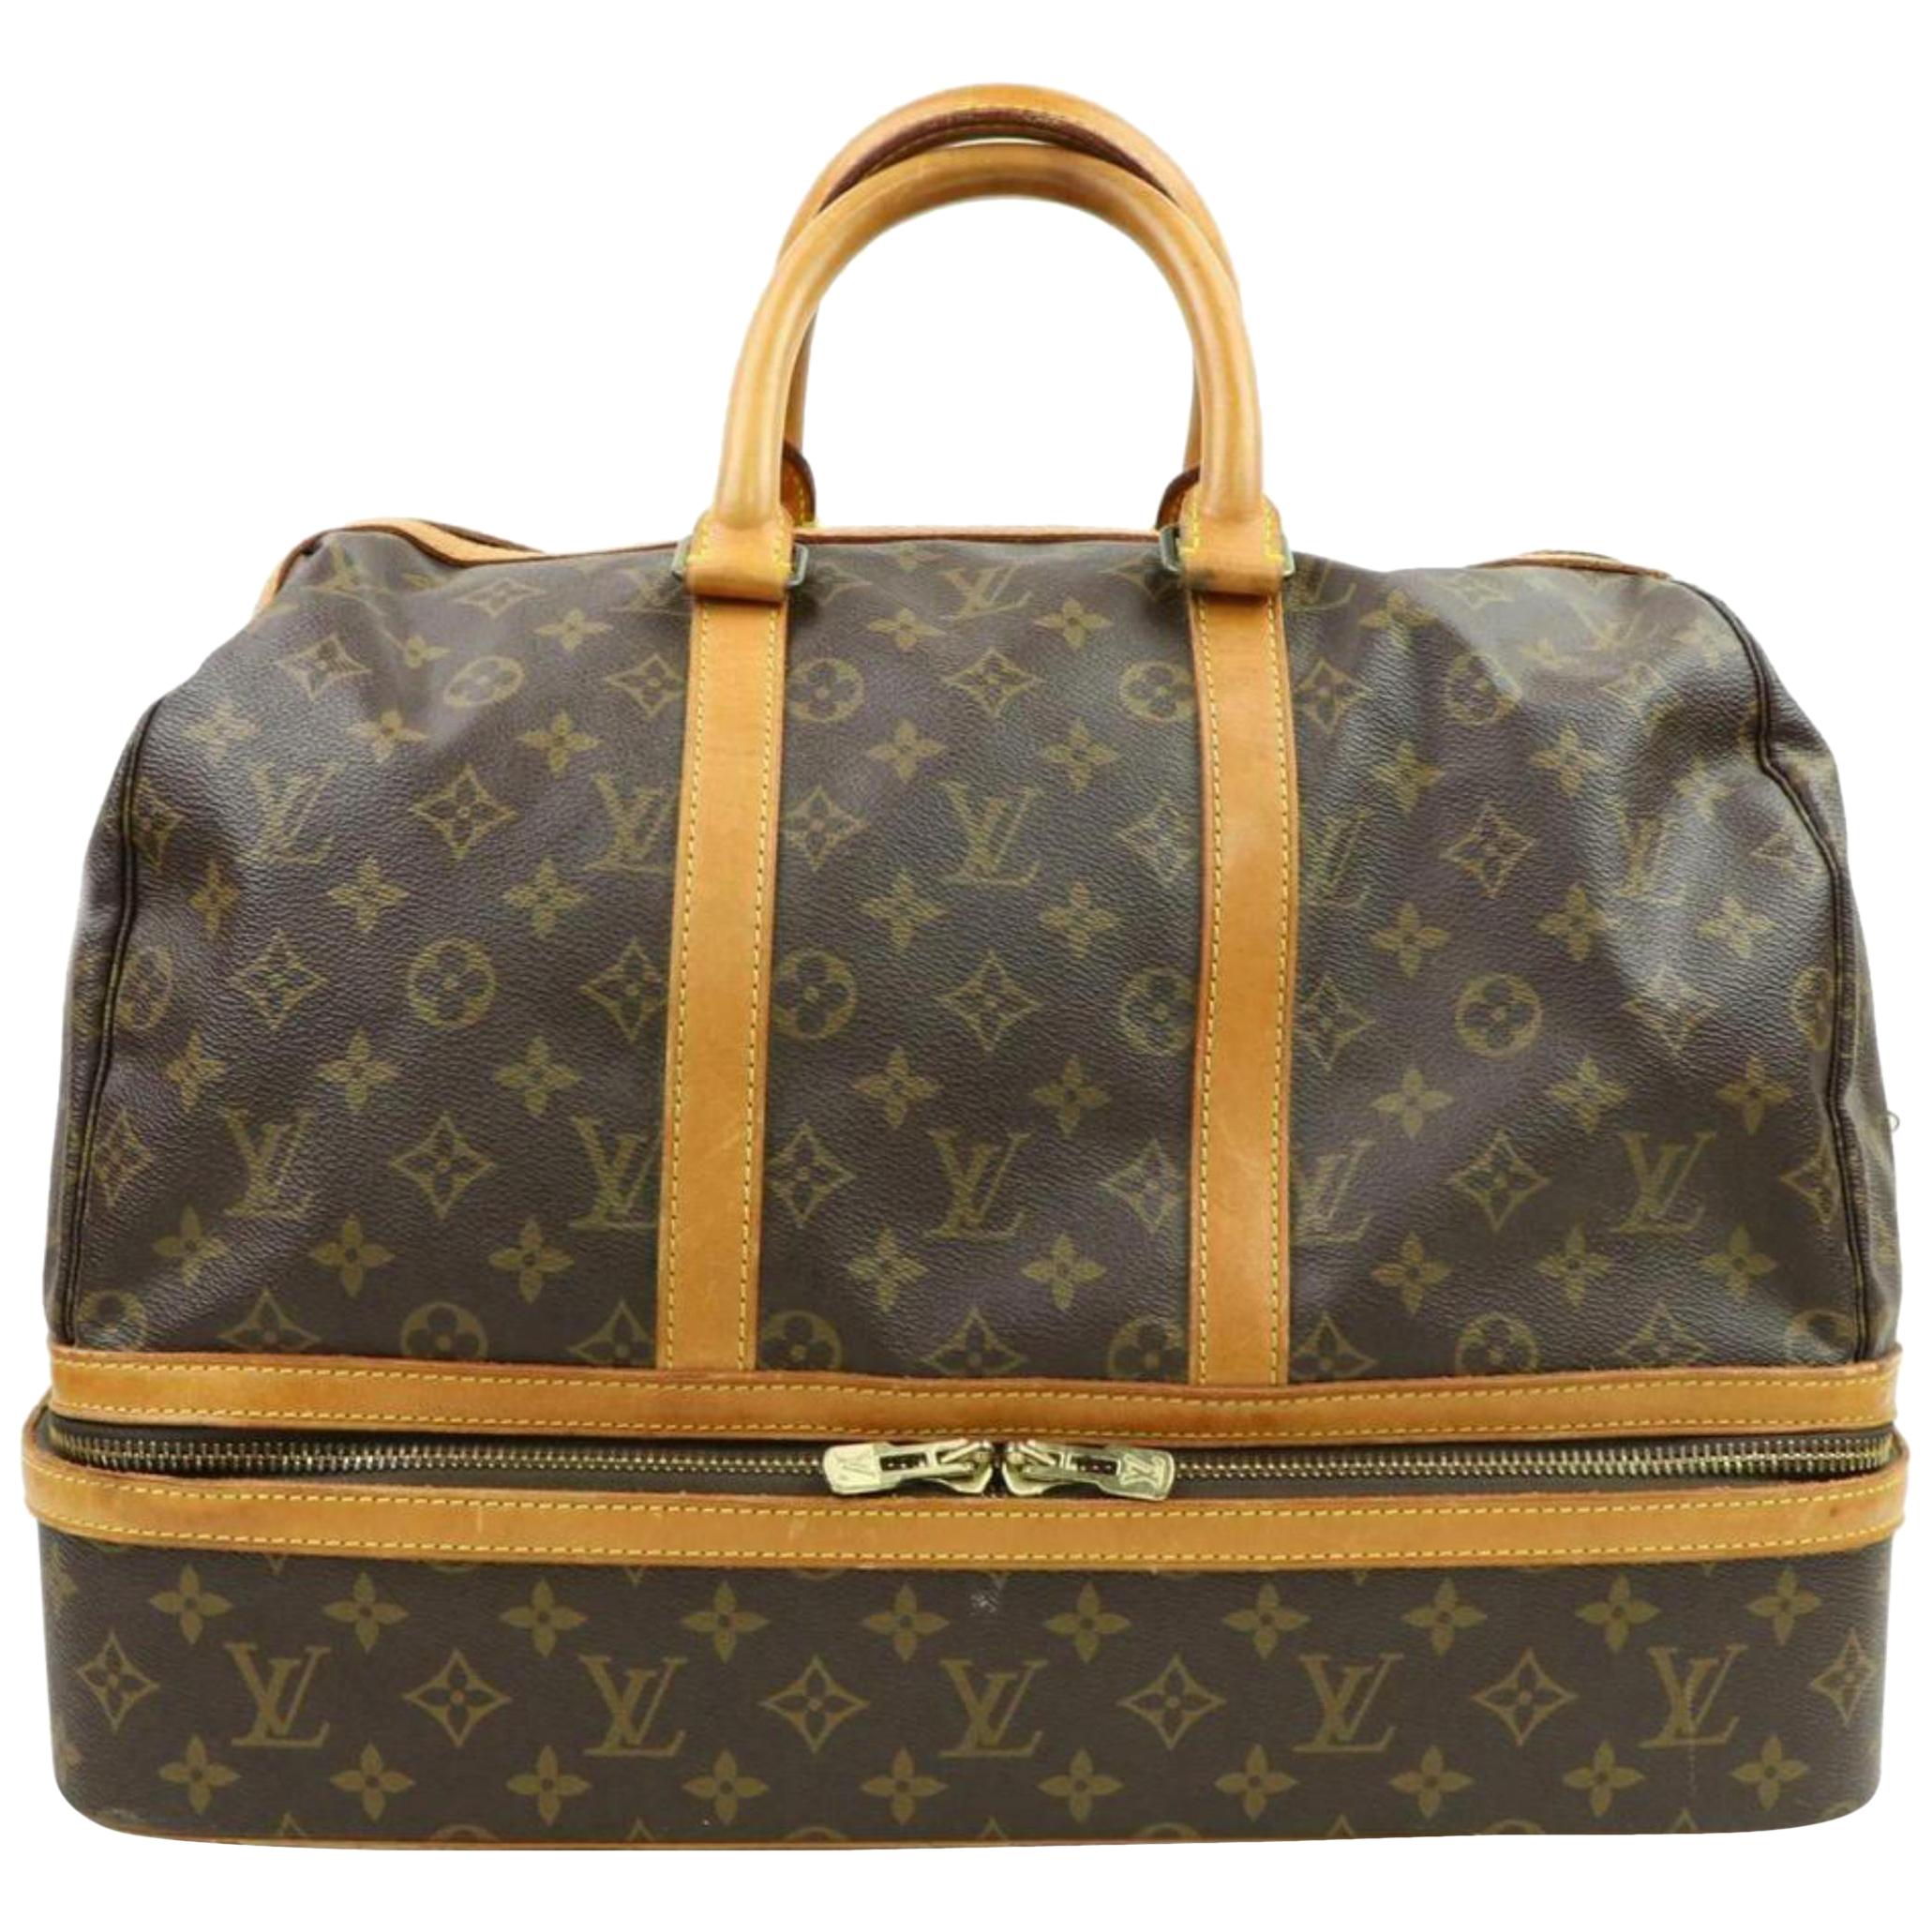 Louis Vuitton Sac Sport Monogram 870440 Brown Coated Canvas Weekend/Travel Bag